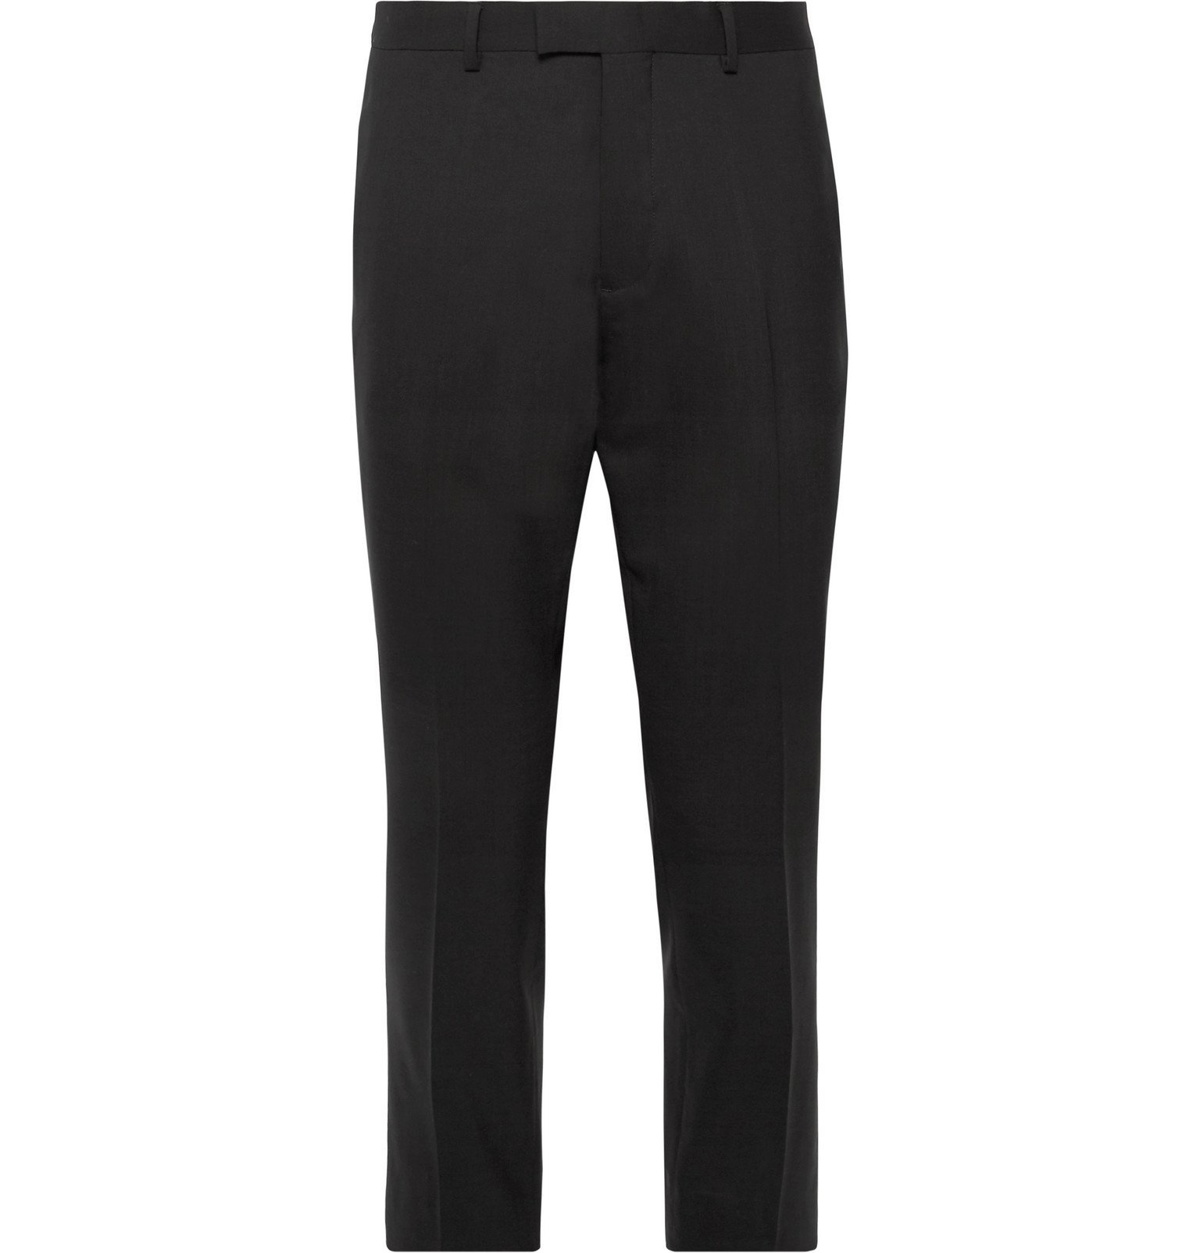 Sandro - Black Wool-Blend Suit Trousers - Black Sandro